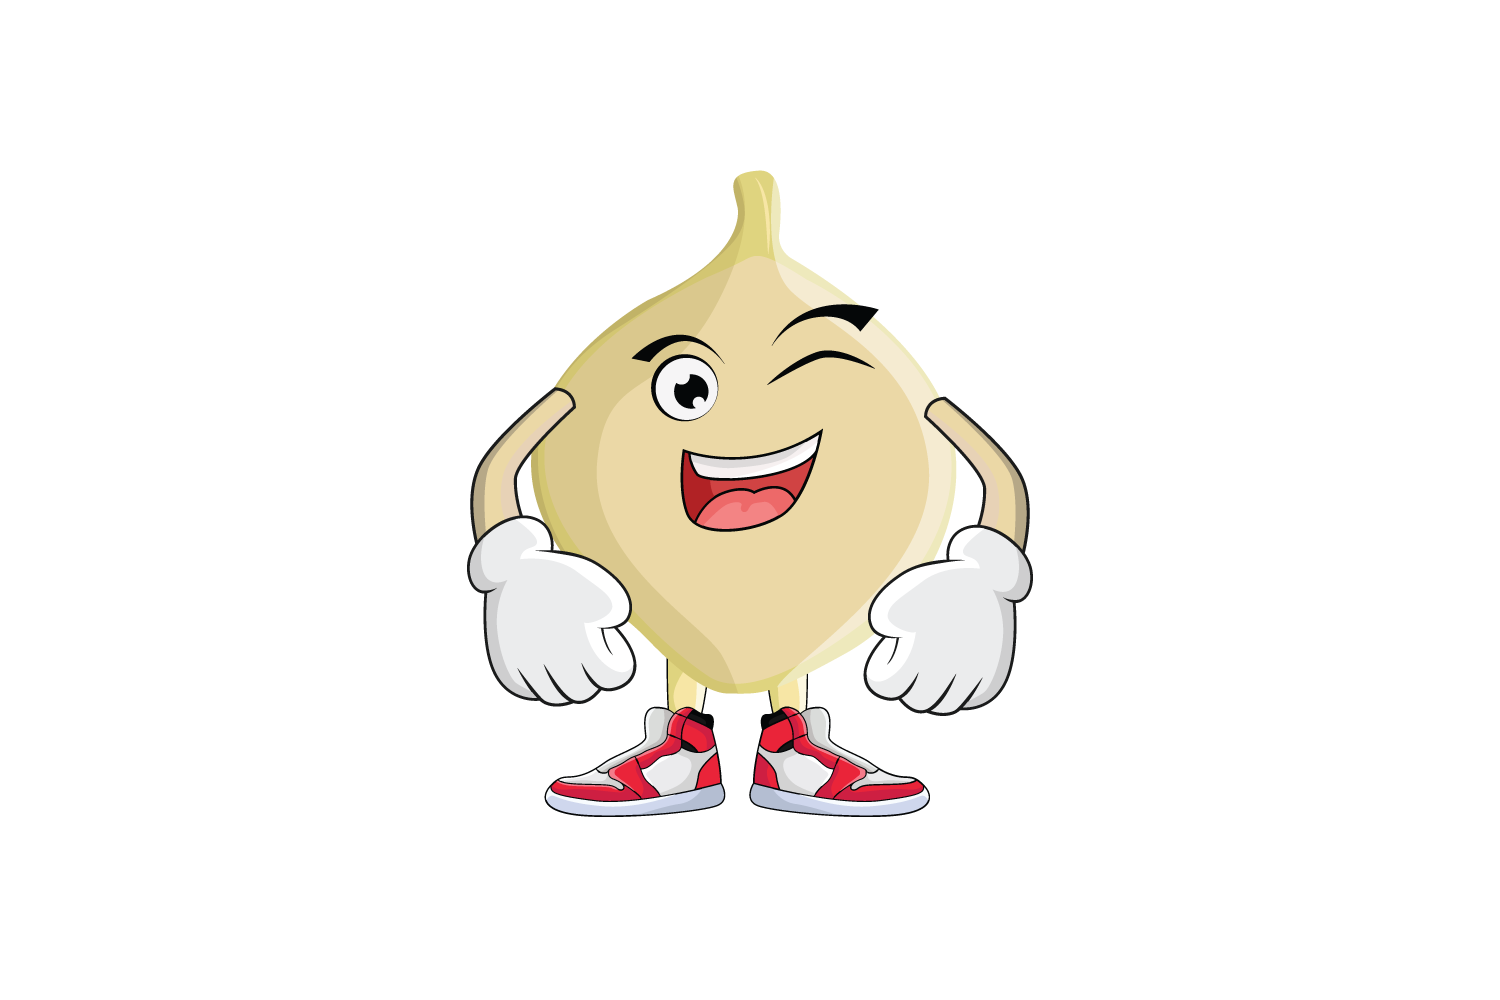 Jicama Smile Wink Fruit Cartoon Character By Printables Plazza Thehungryjpeg Com